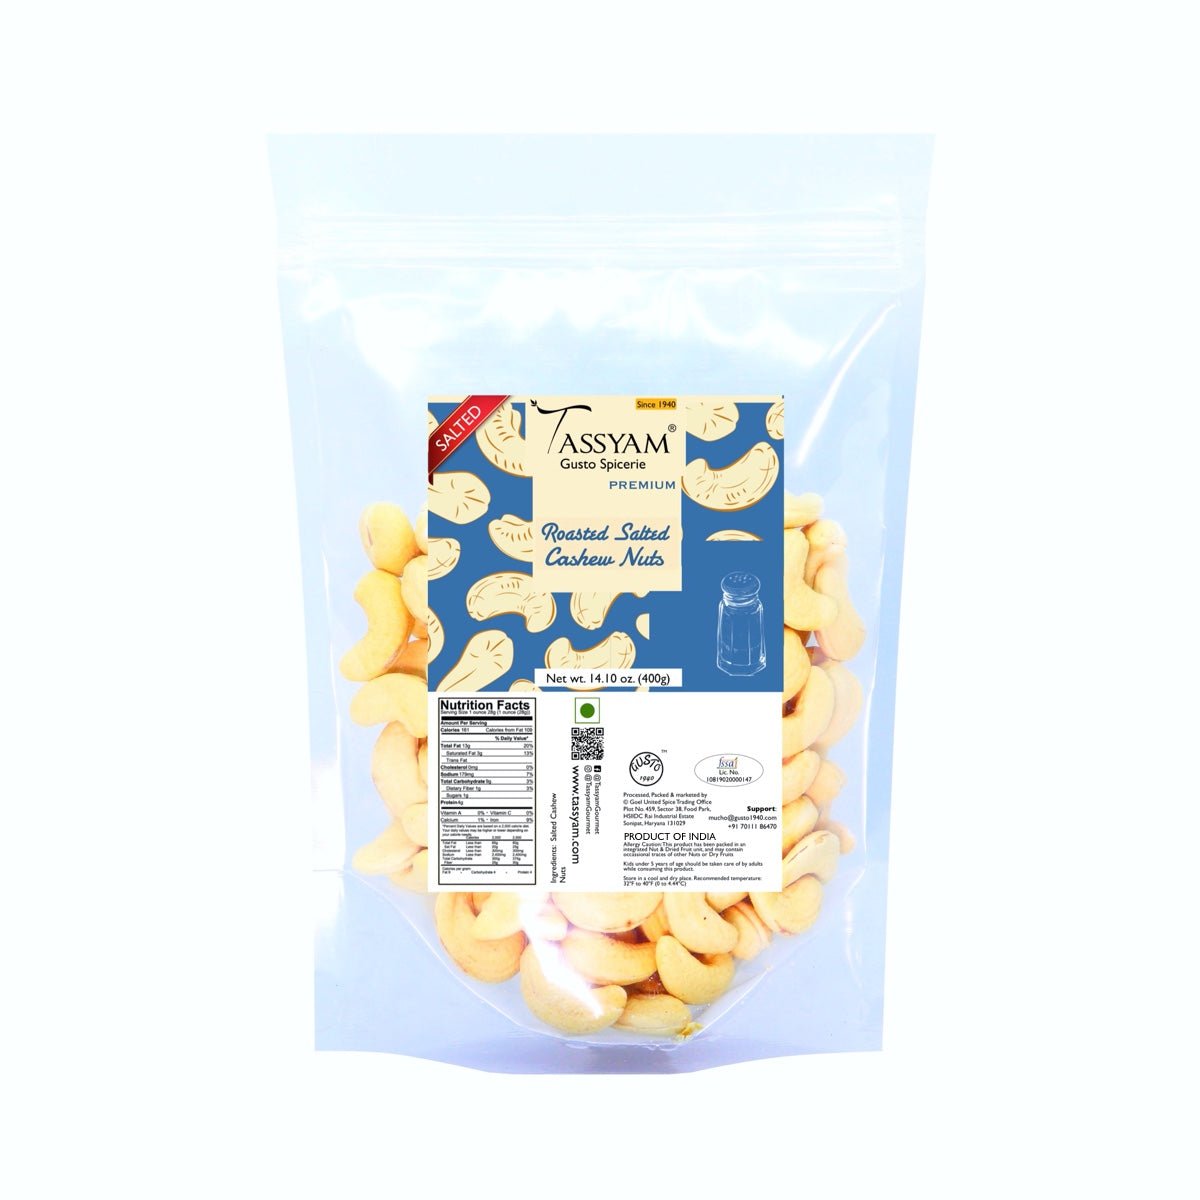 Roasted Salted Cashews Namkeen Kaju - Tassyam Organics